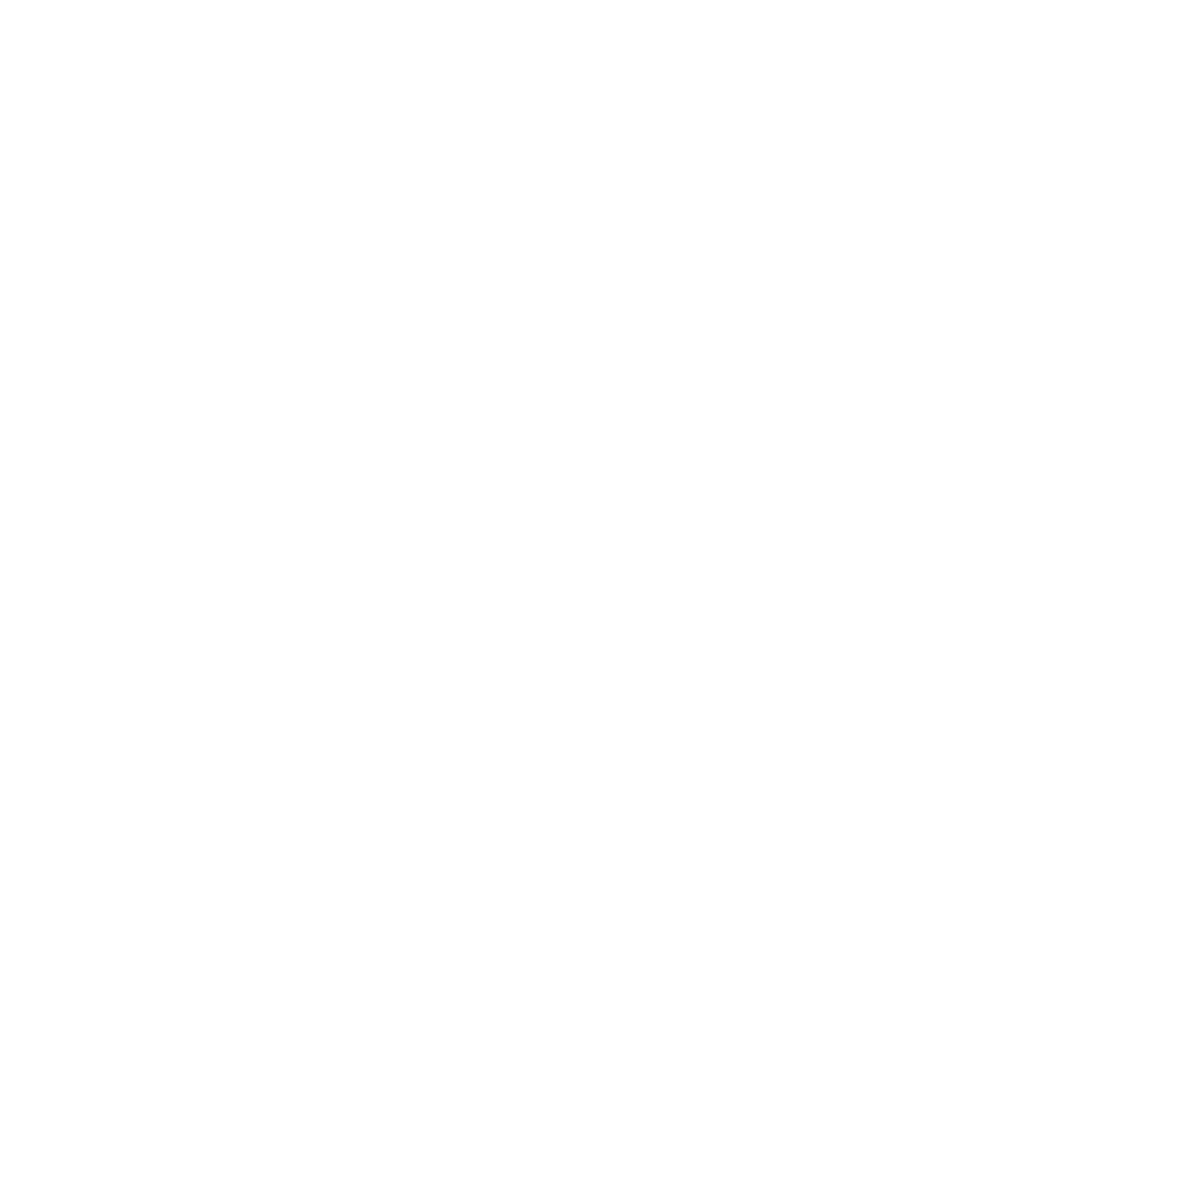 manny's